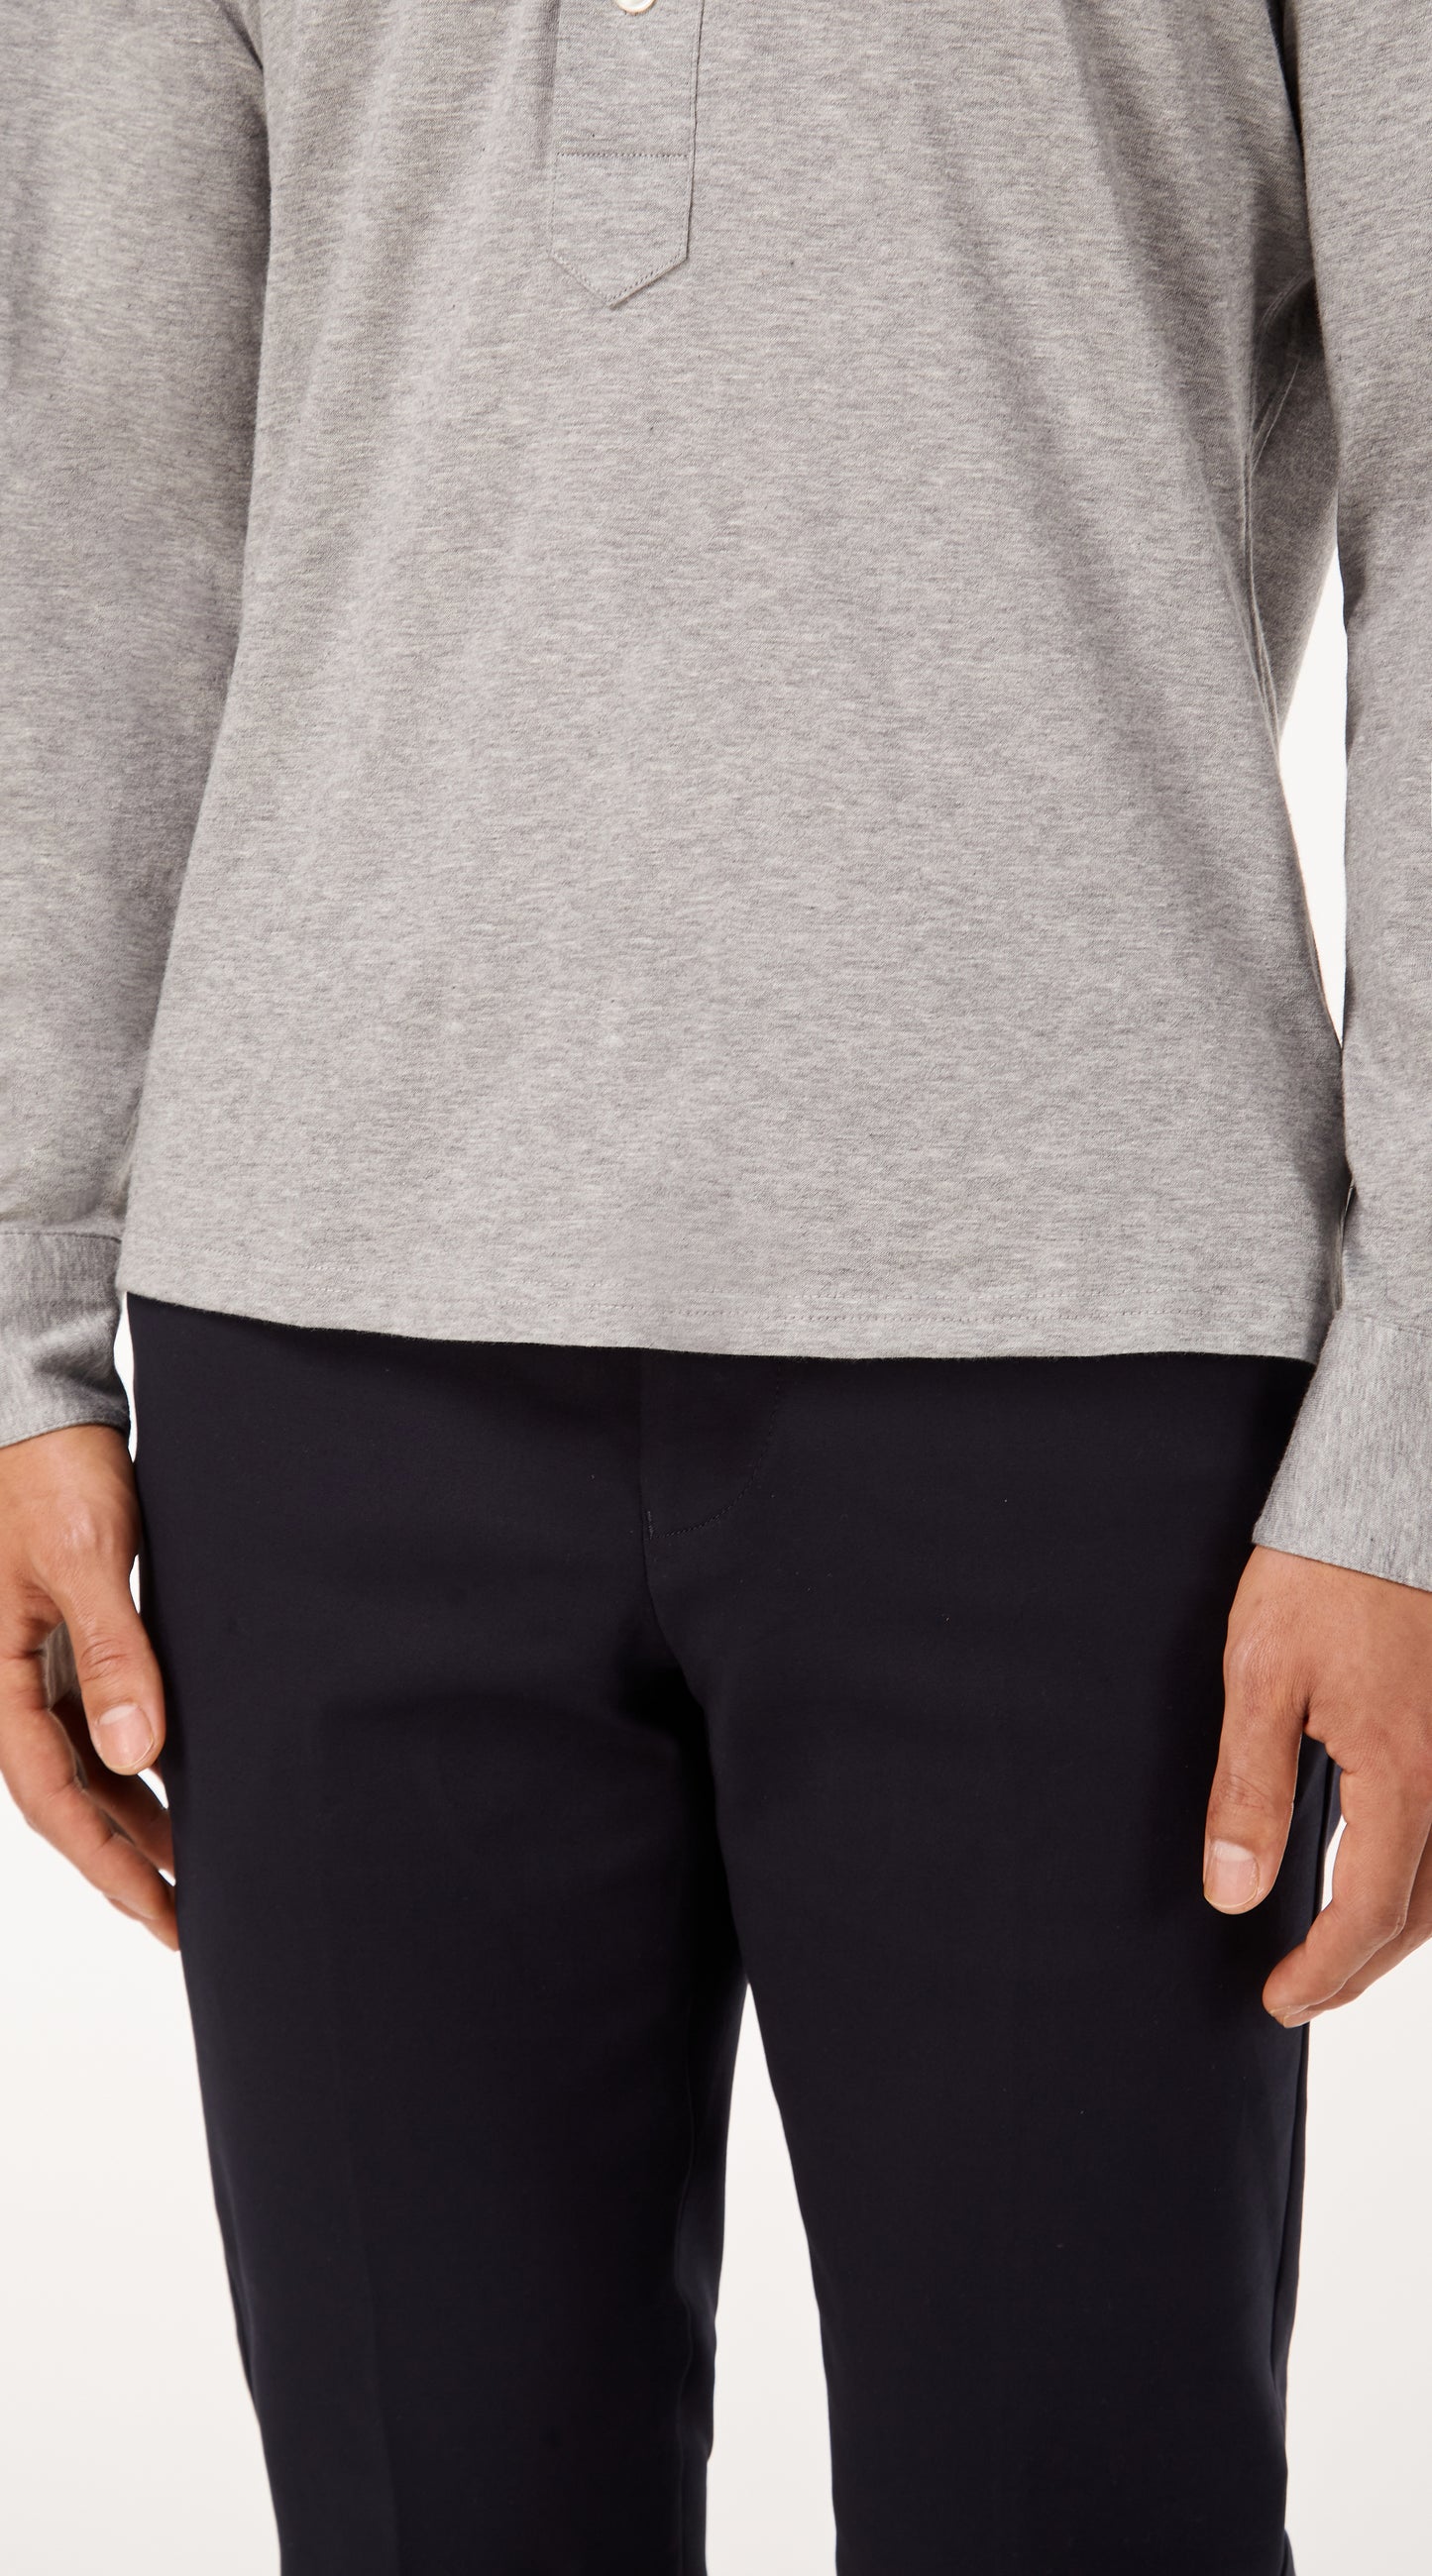 Grey Half-Placket Jersey Custom Shirt (Straight Bottom)